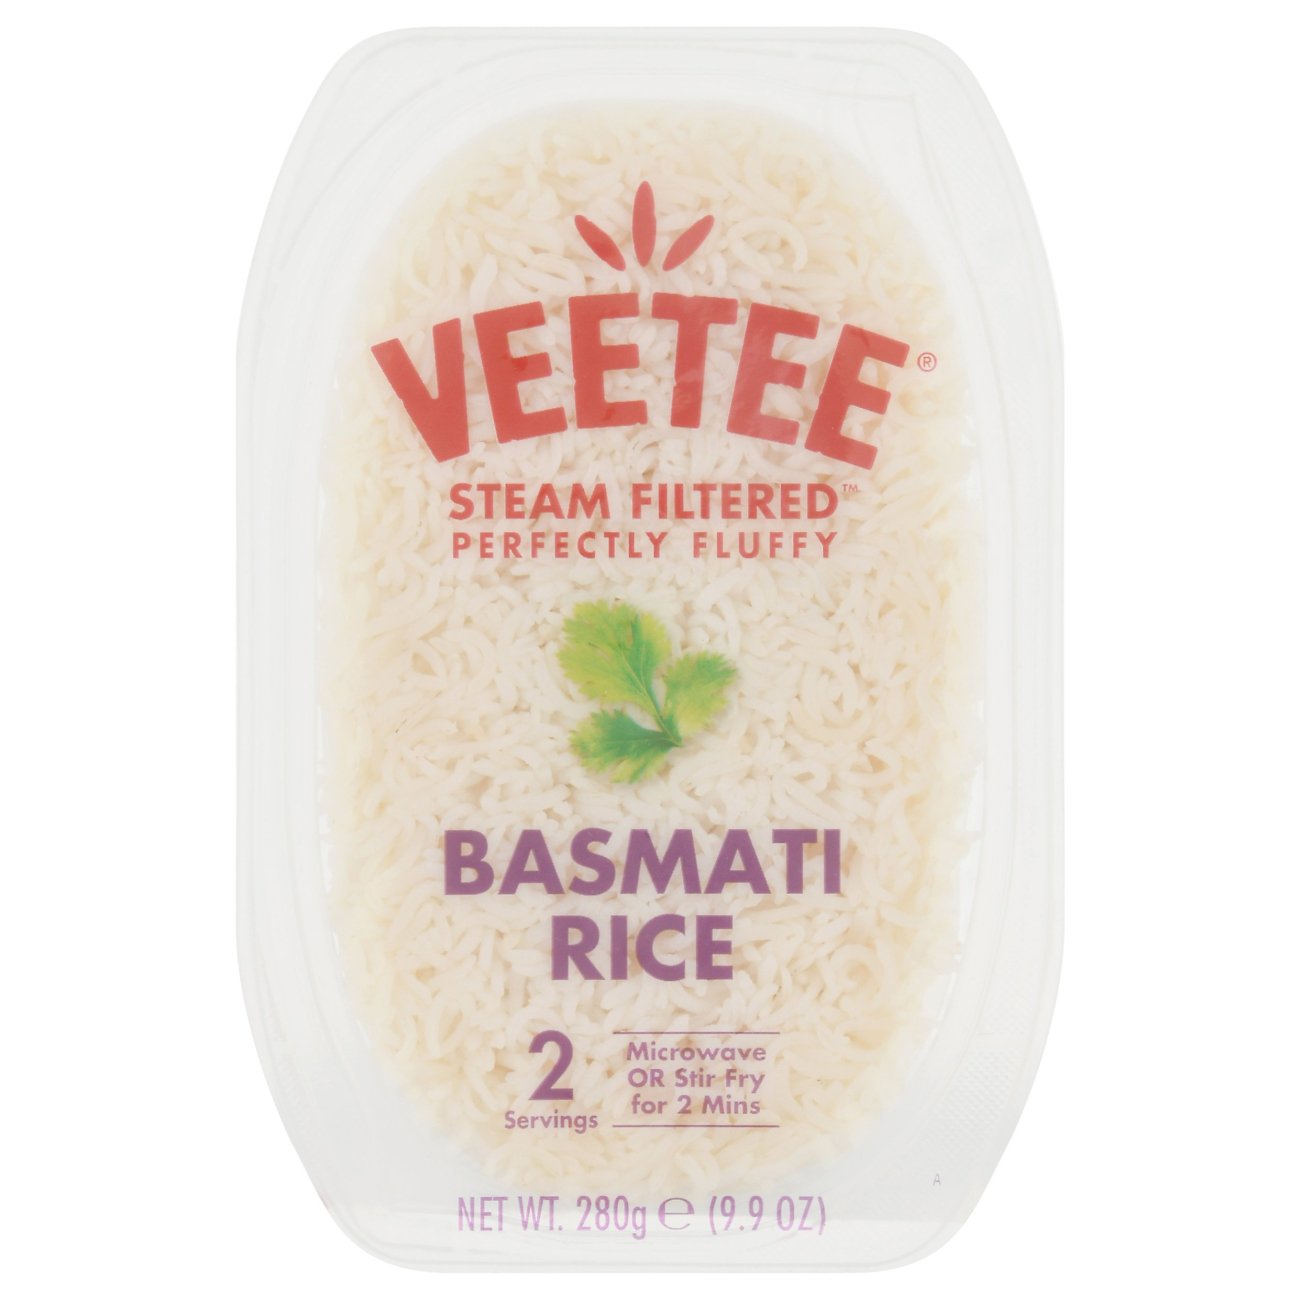 Ben's Original Ready Rice Basmati Rice - Shop Rice & Grains at H-E-B